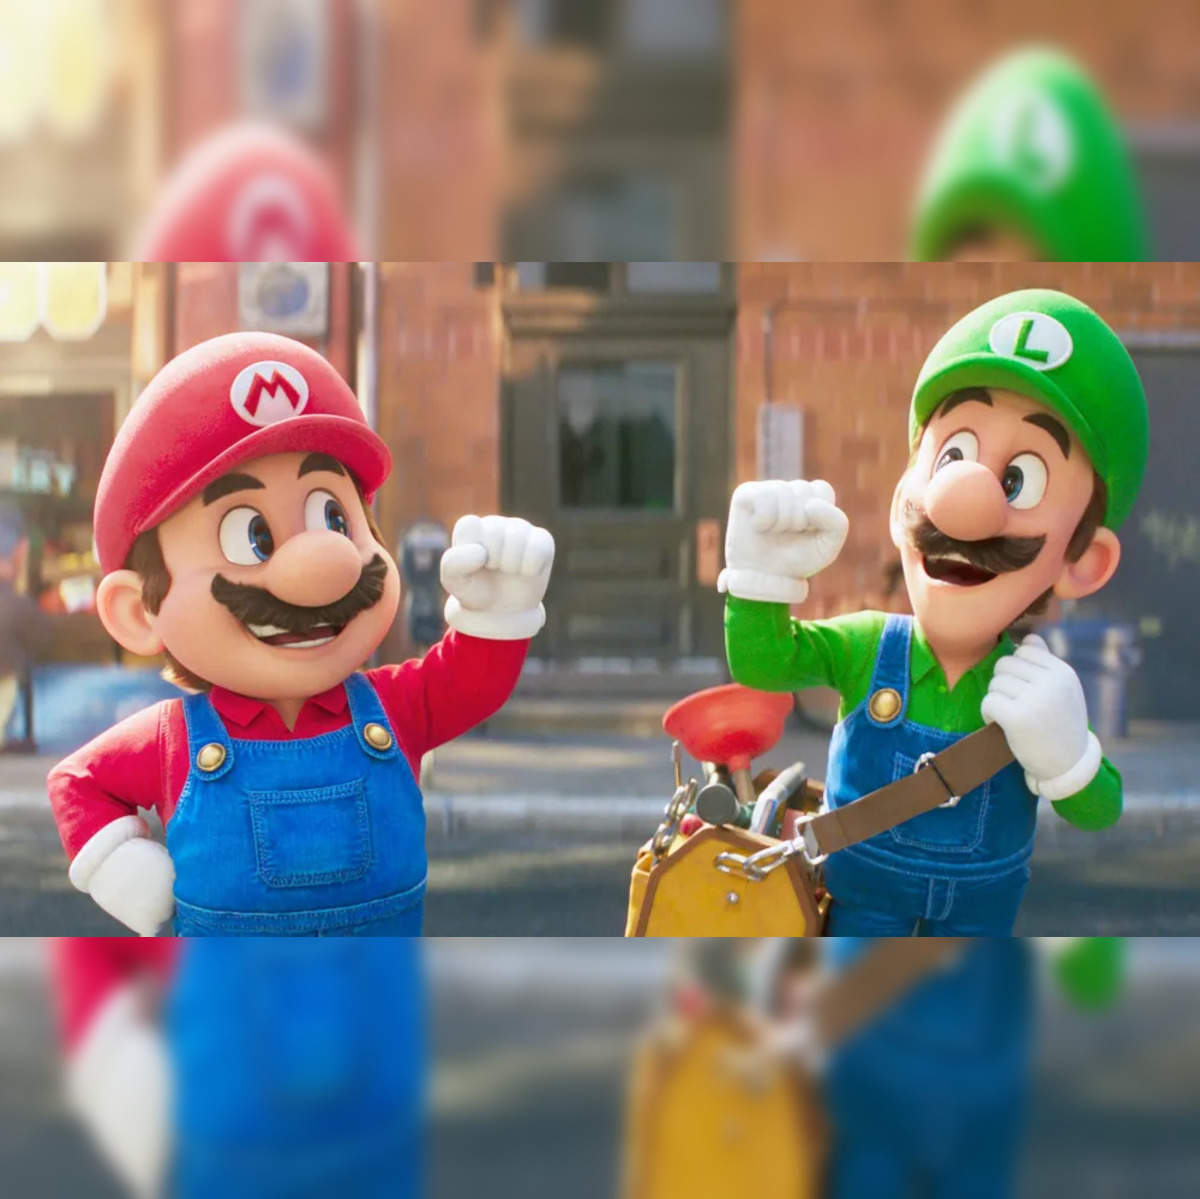 The Super Mario Bros: Here's how to stream 'The Super Mario Bros